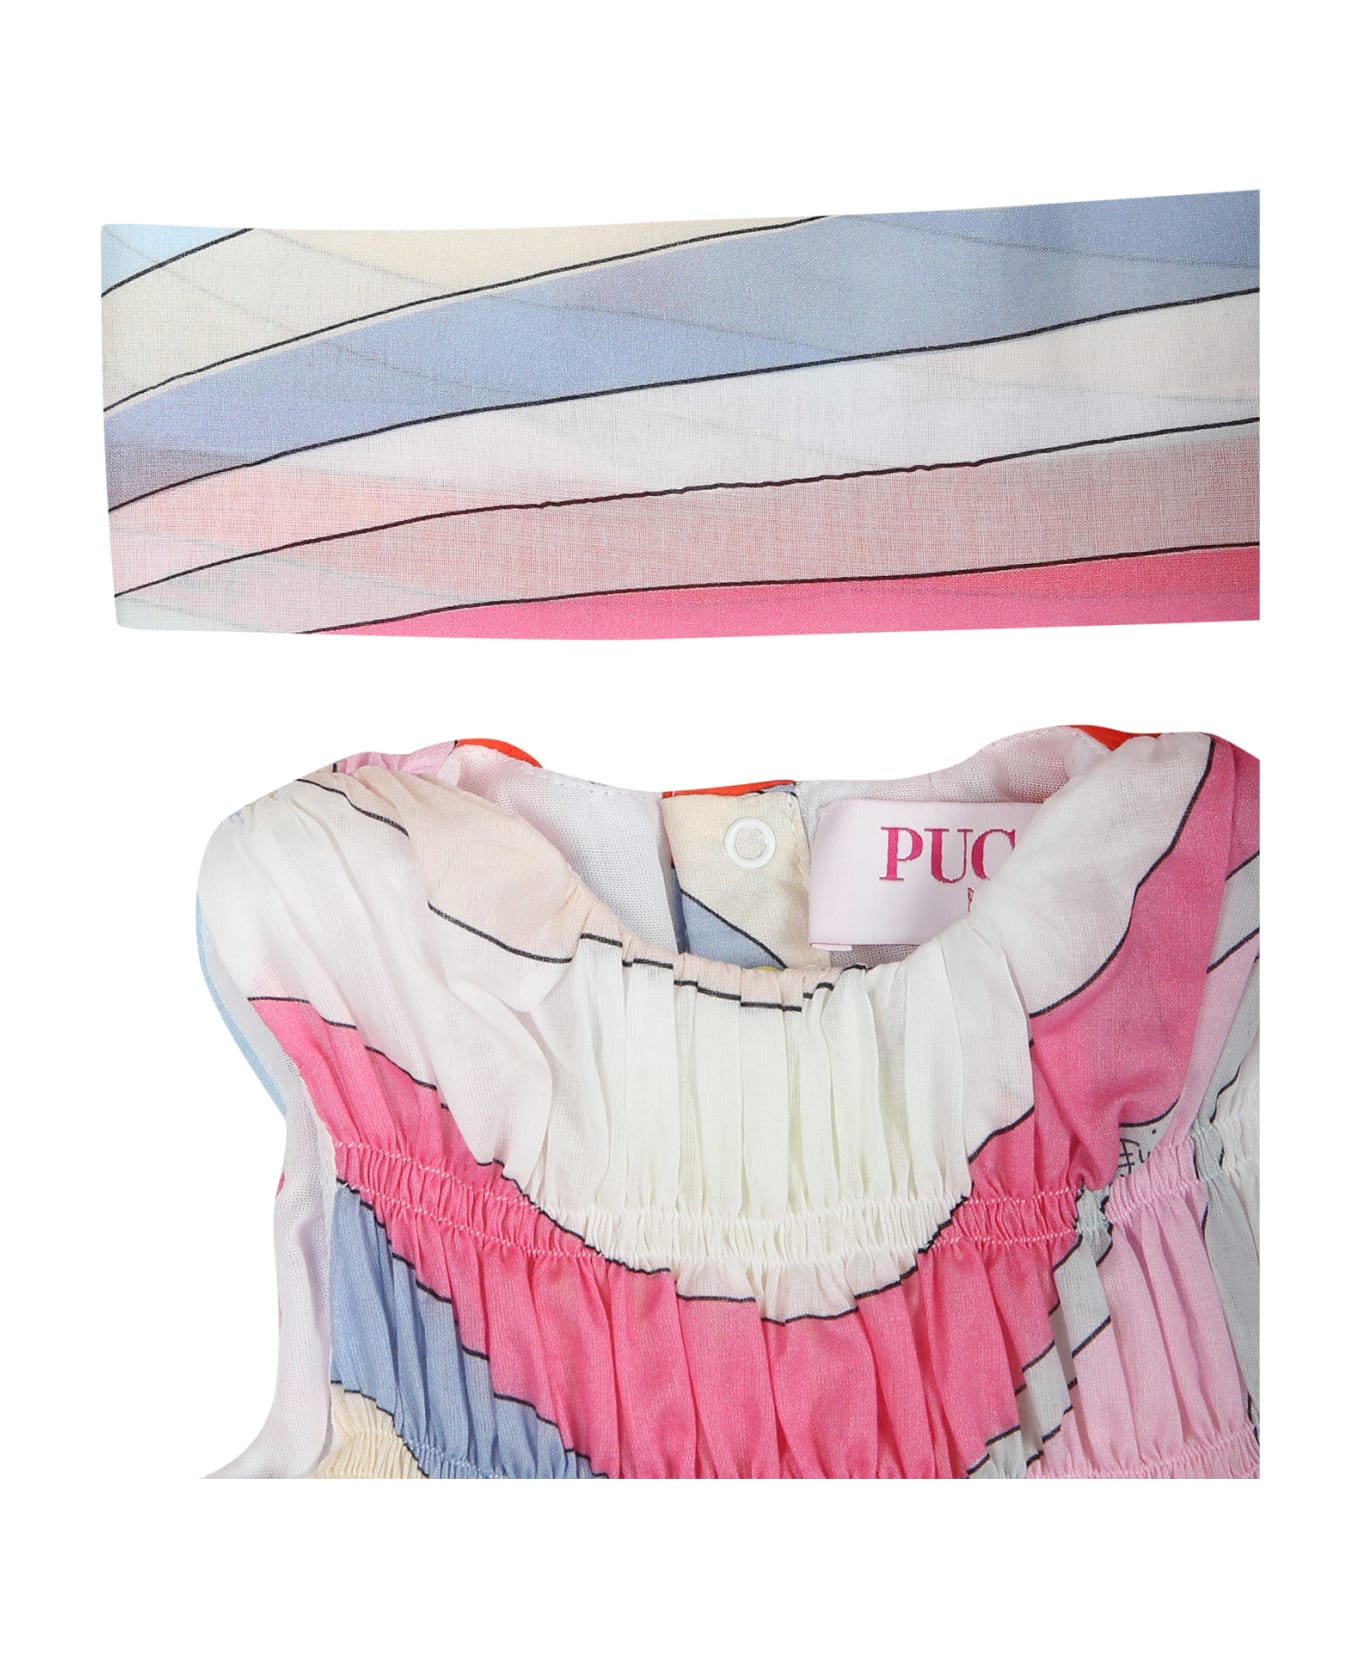 Pucci Multicolor Romper For Baby Girl With Iconic Multicolor Print - Multicolor